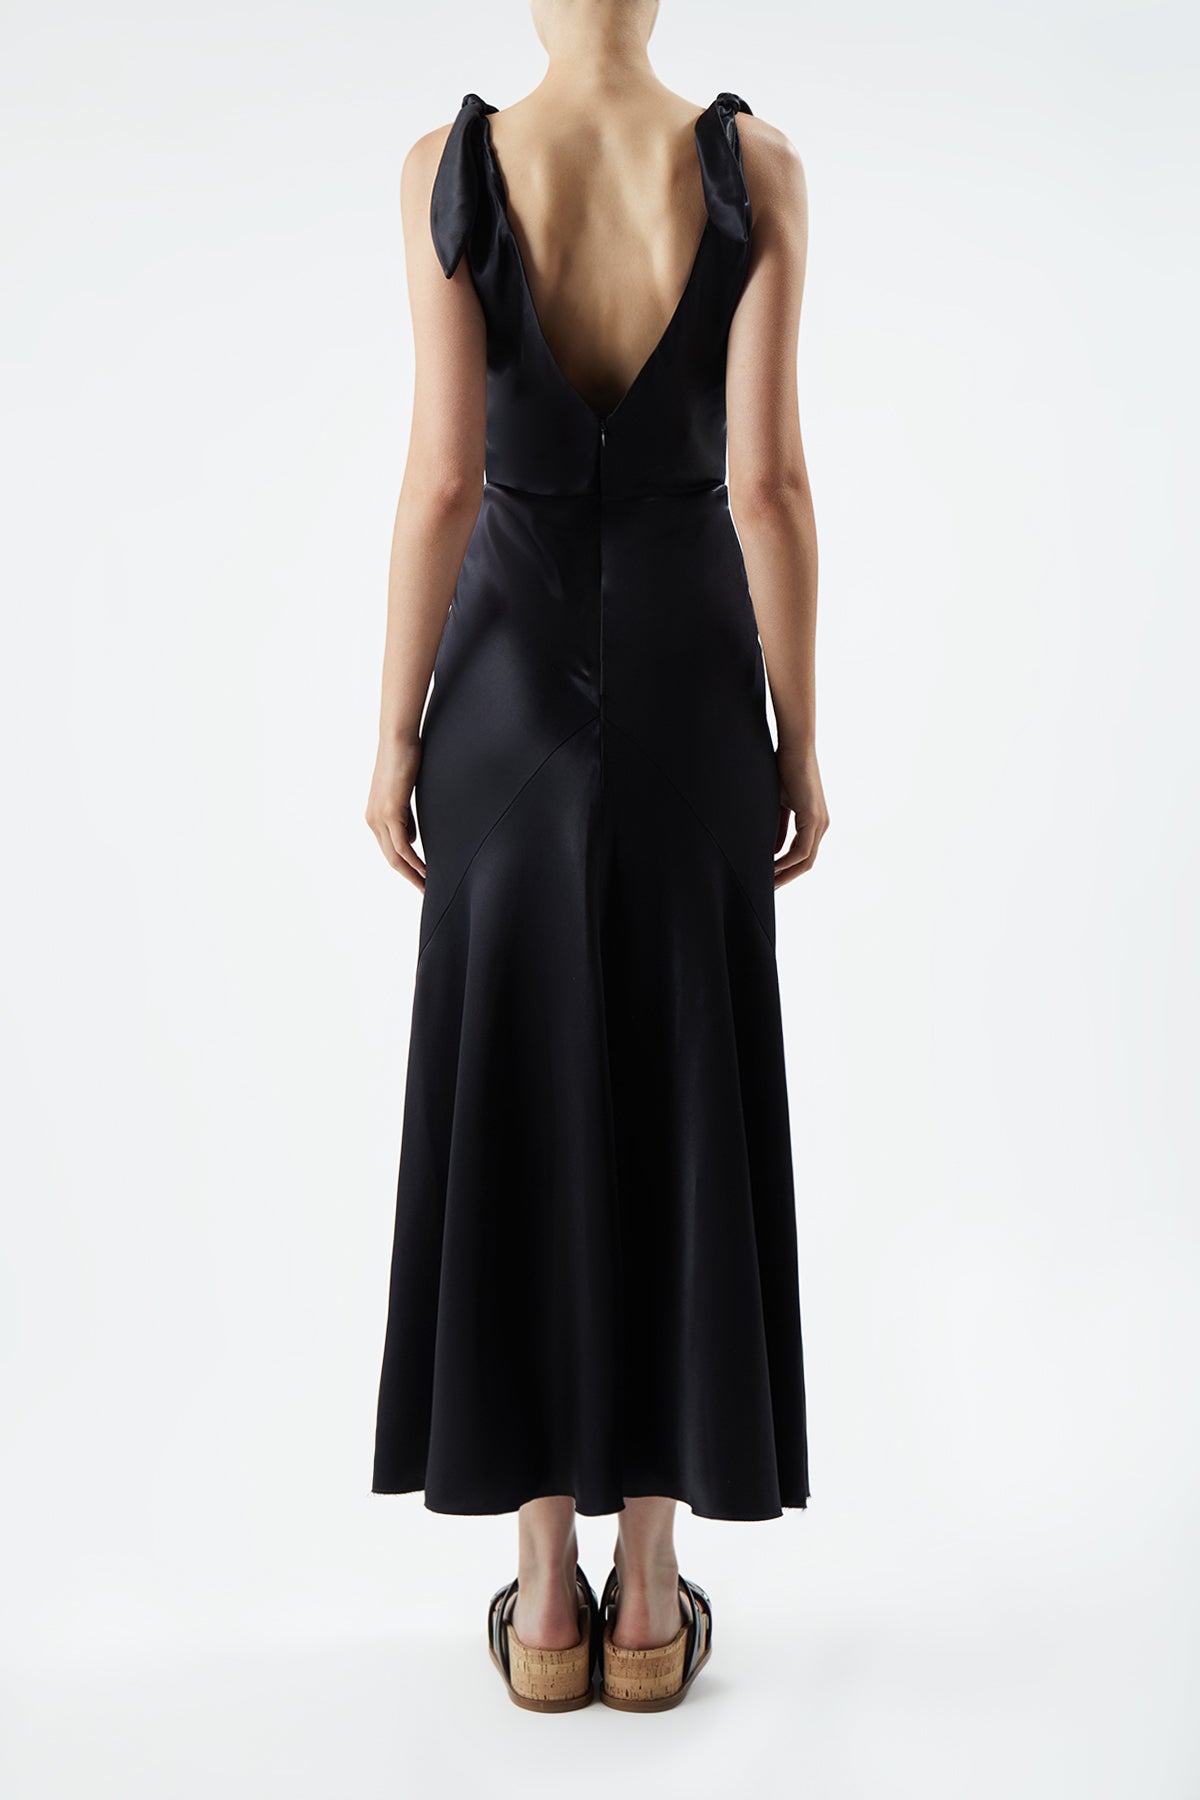 Havilland Dress in Black Silk